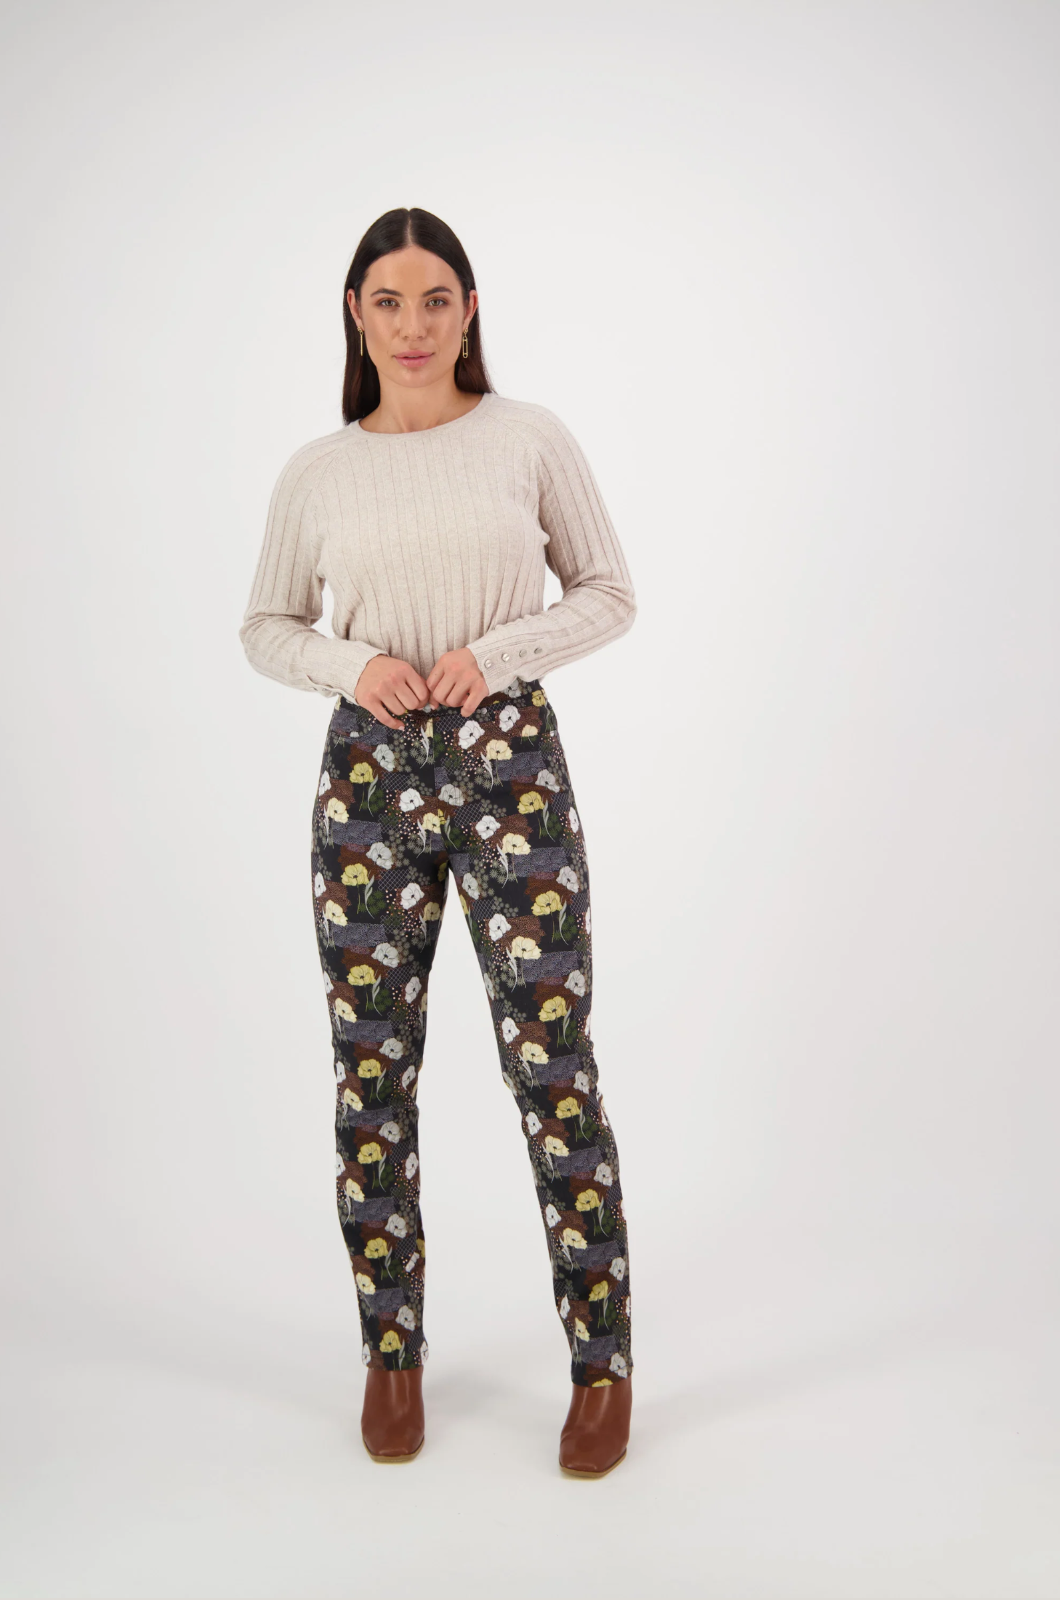 Women's Pants - Shop online at Urban Cachet - Worldwide Shipping